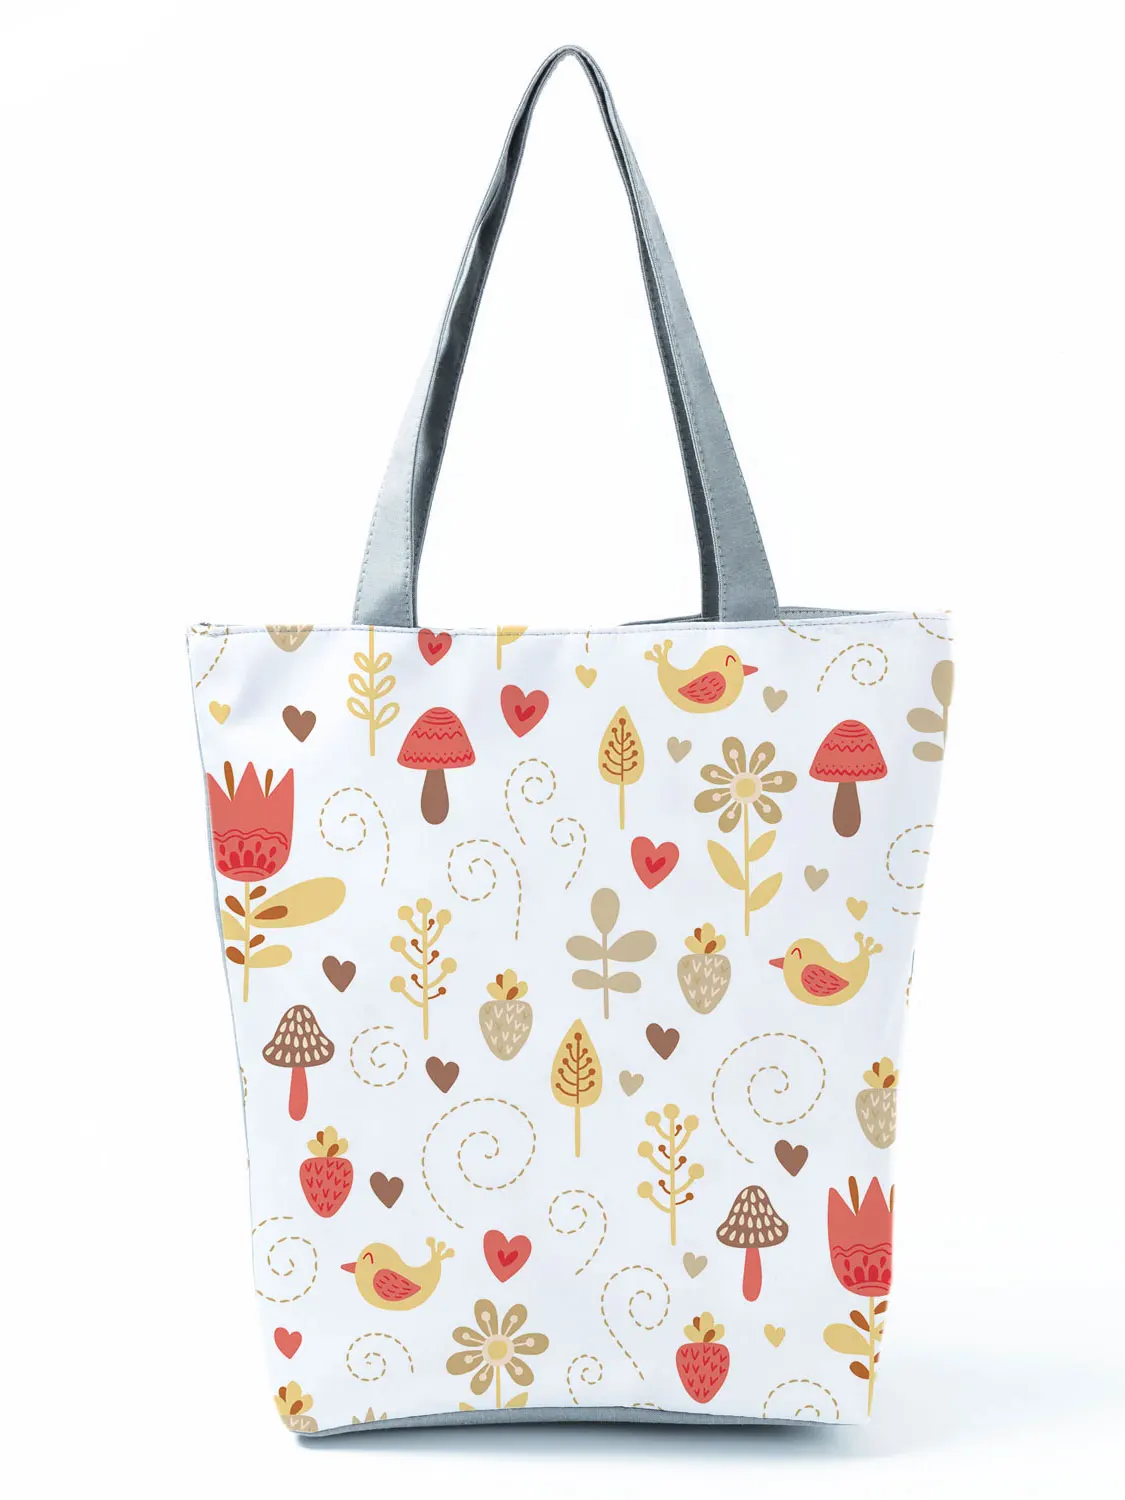 Plant Tote Reusable Shopping Bag Female Custom Pattern Mushroom Printed Handbags Women Floral High Capacity Shoulder Bag 